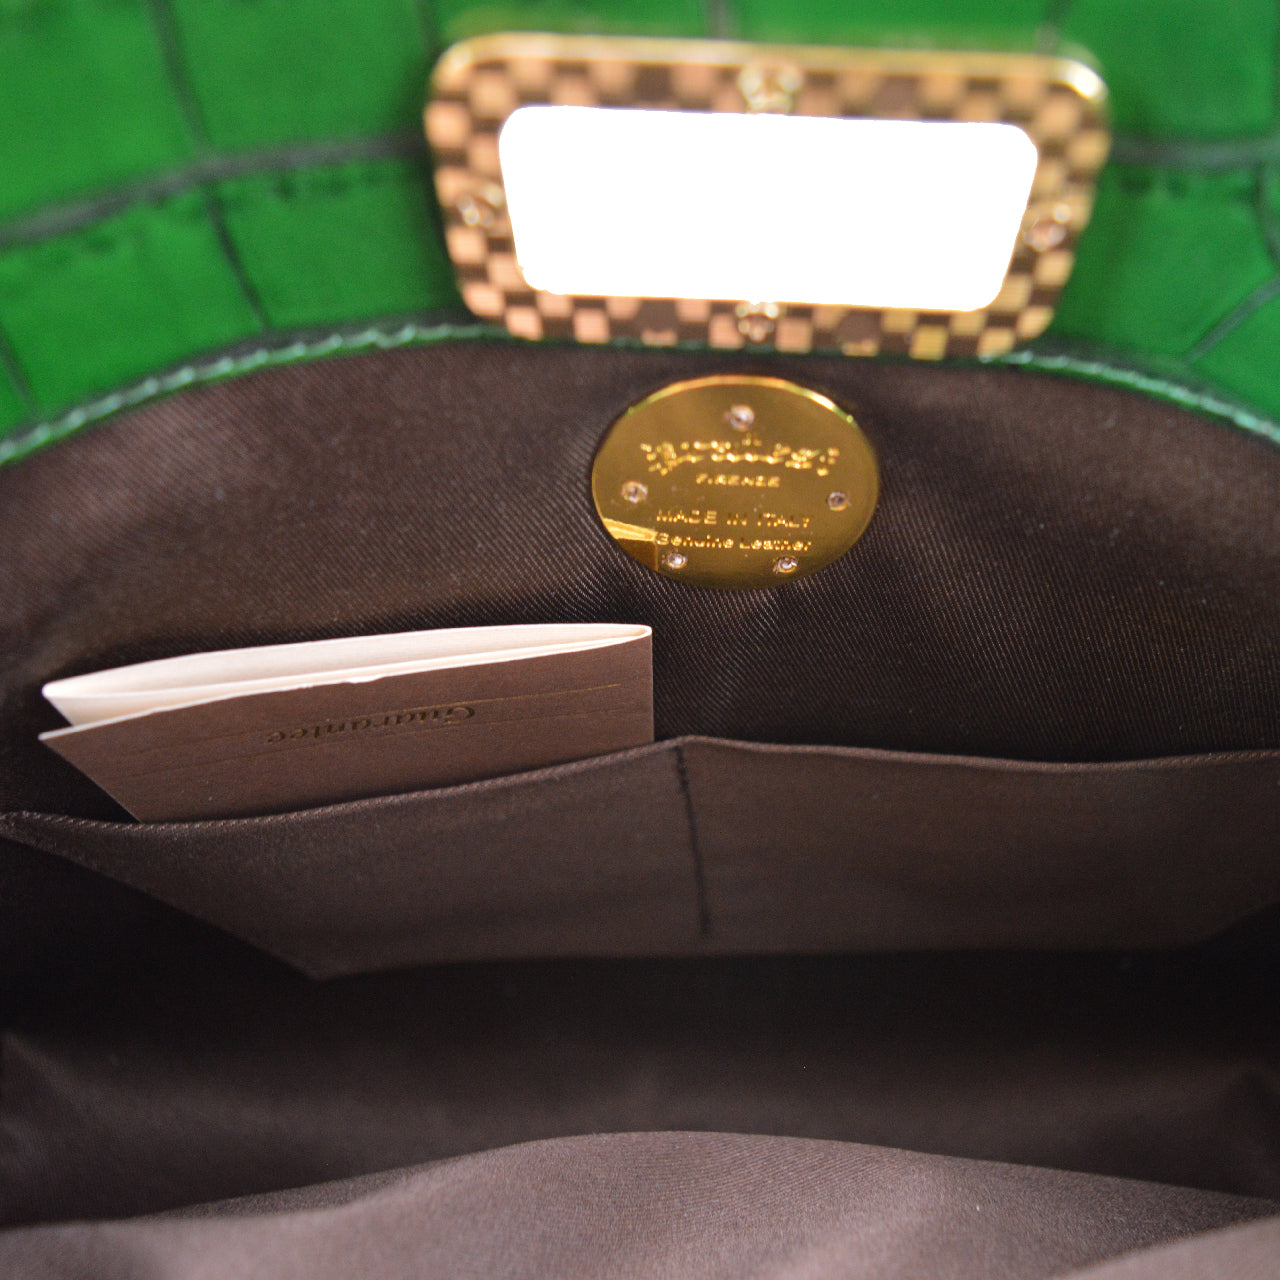 Pratesi Sarteano Shoulder Bag in genuine Italian leather K291 - Vegetable Tanned Italian Leather Cherry